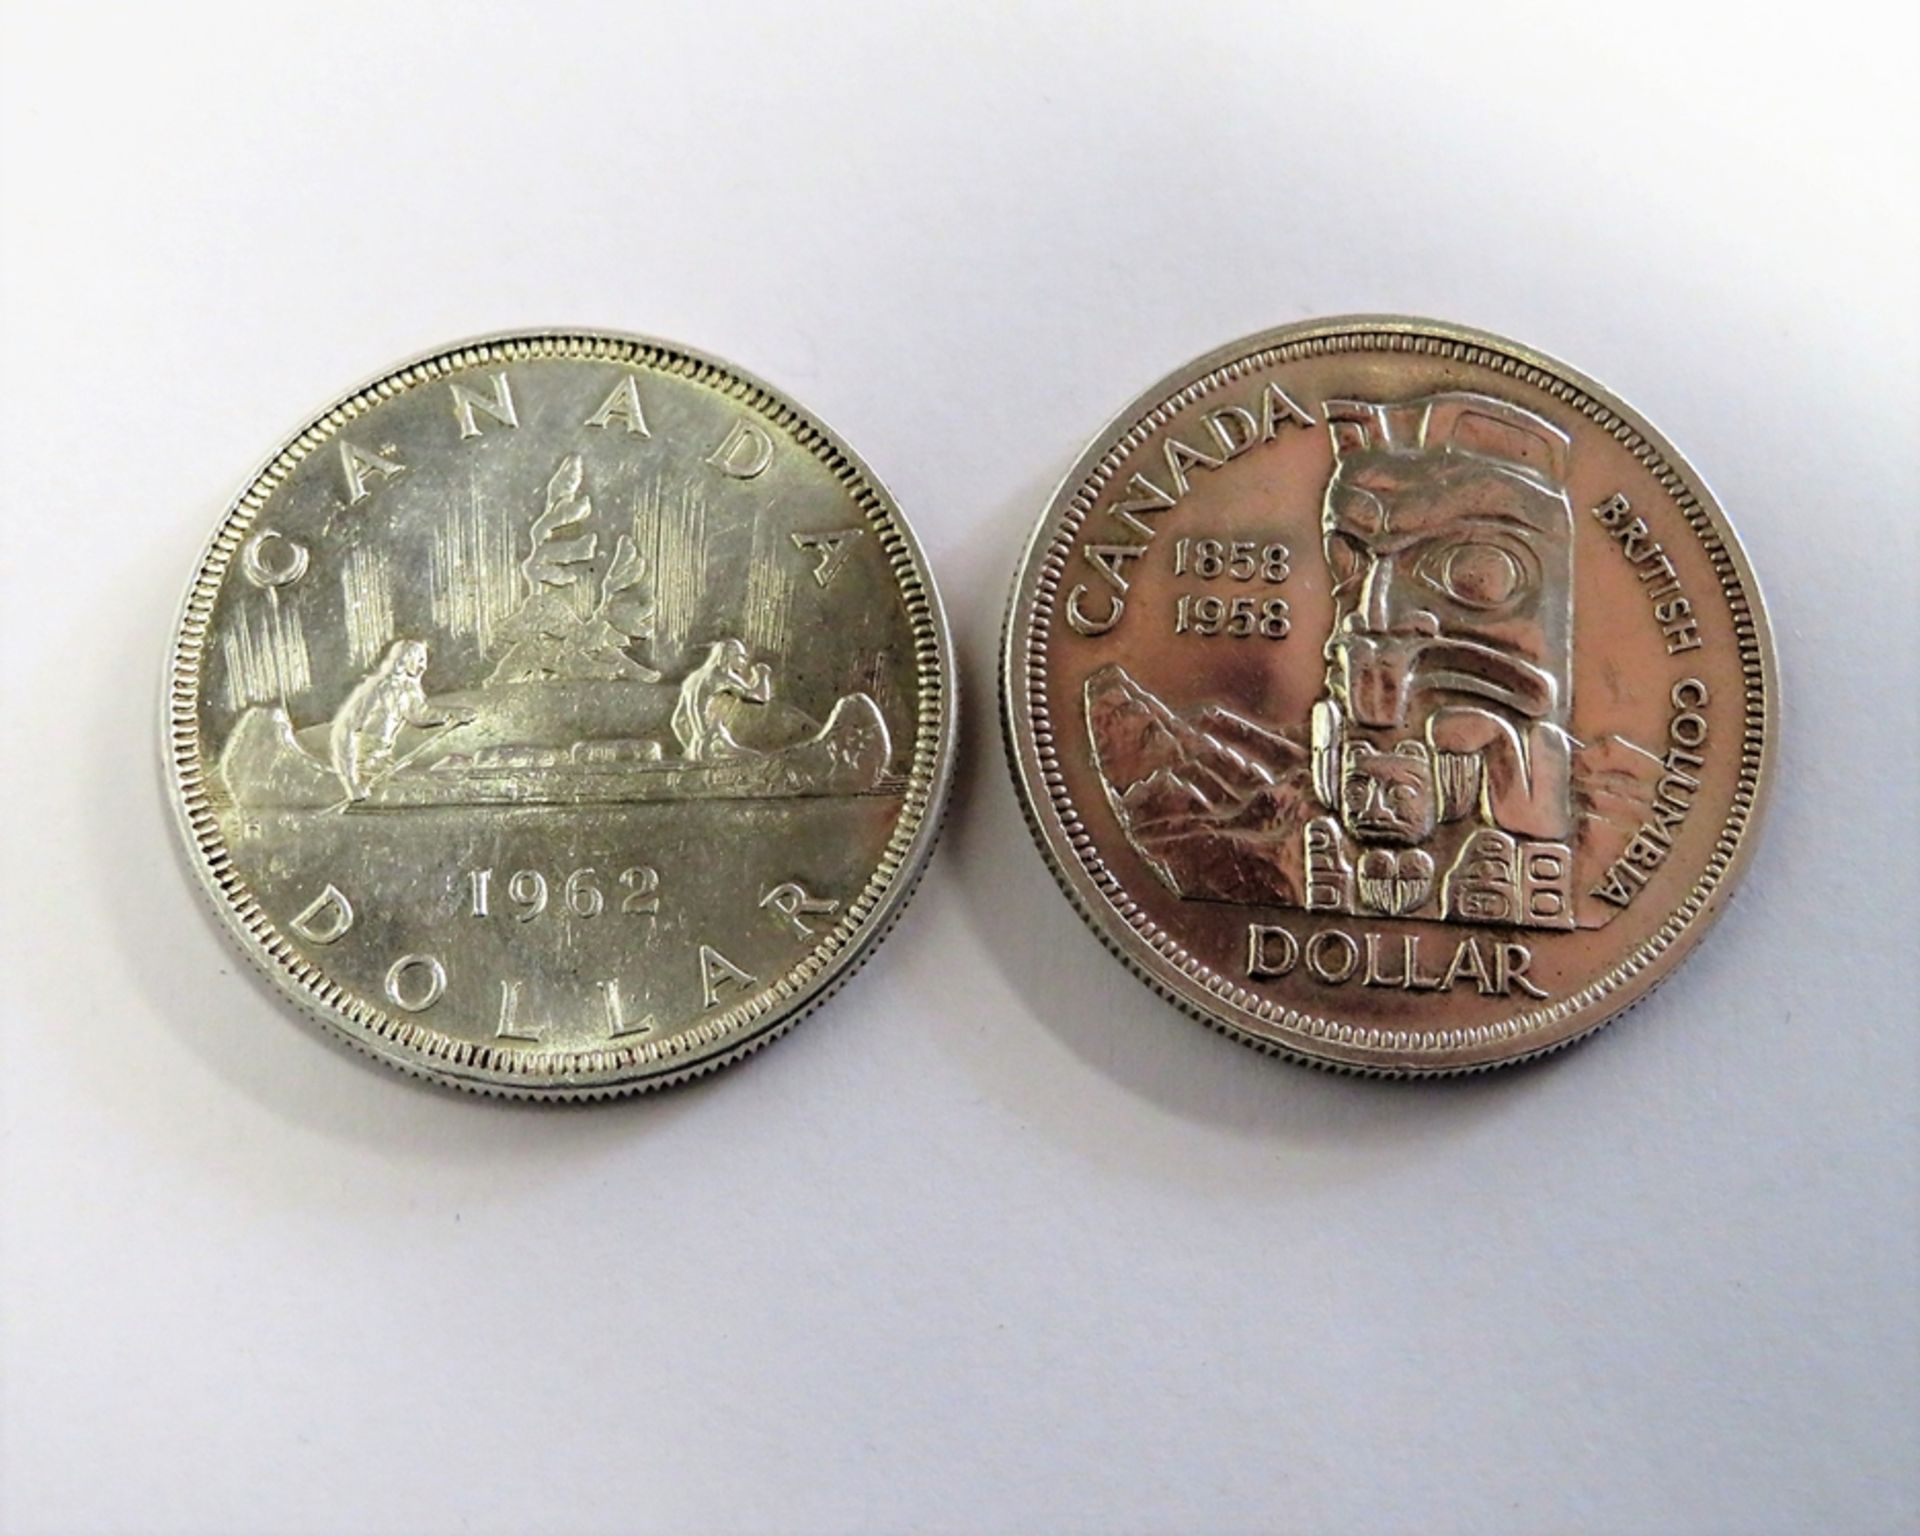 2 Silbermünzen, Canada, Dollar, Elizabeth II., 1958/1962, 46 g, d 3,5 cm. - Bild 2 aus 2